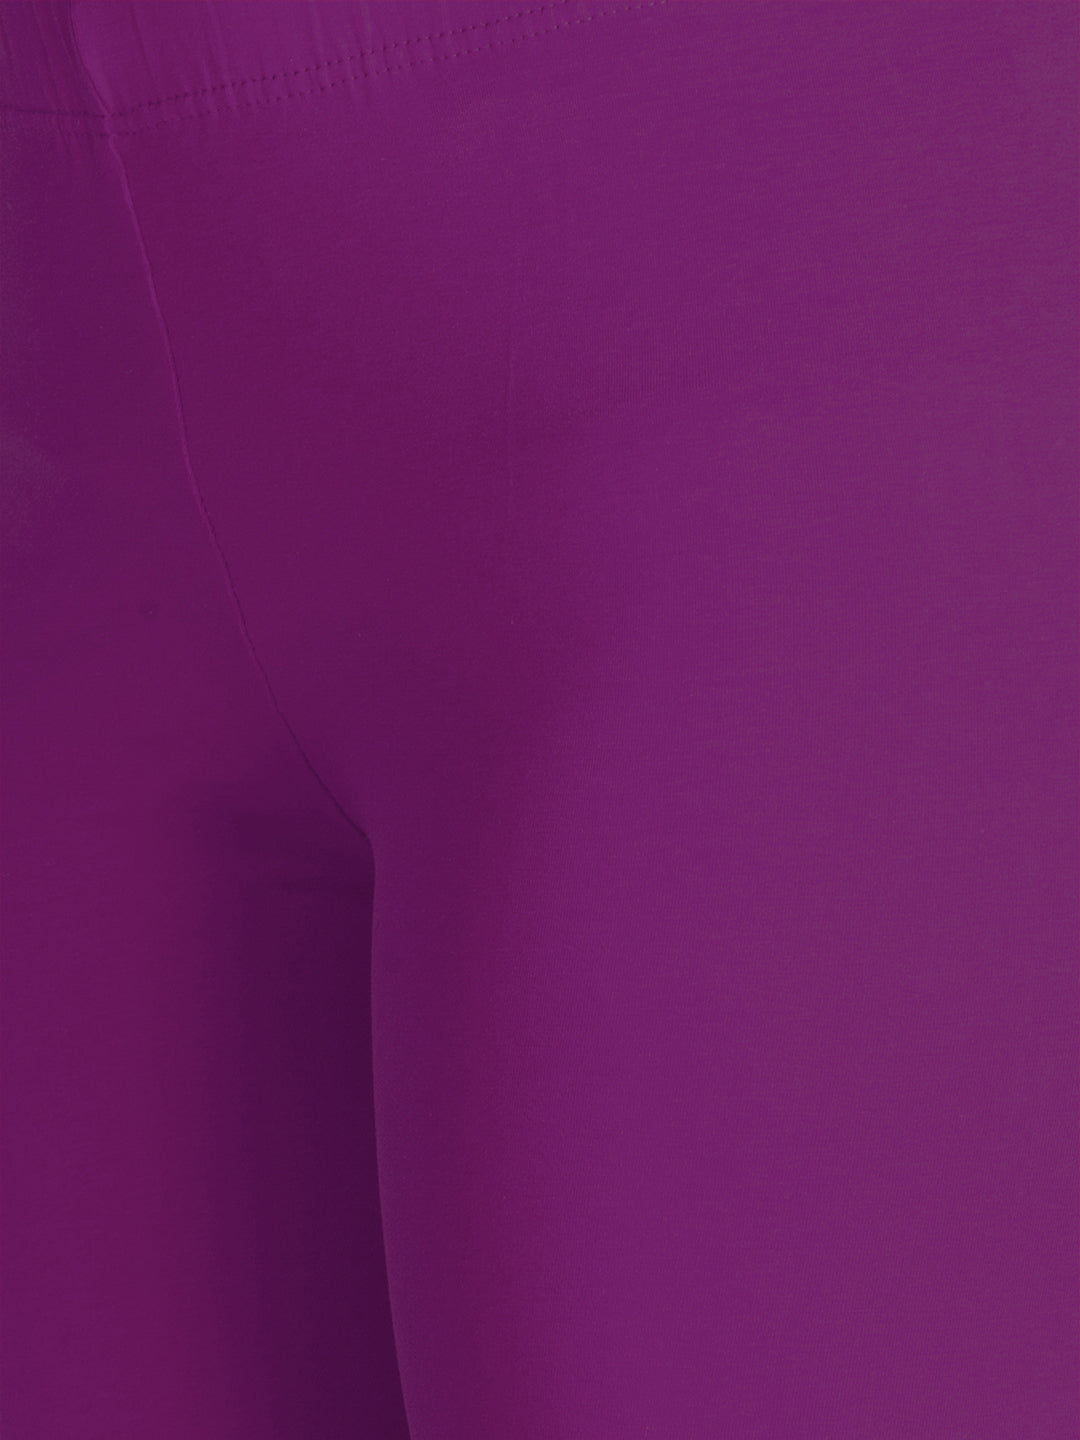 Archu Cotton Dark Purple Leggings, Size: Free at Rs 249 in Nashik